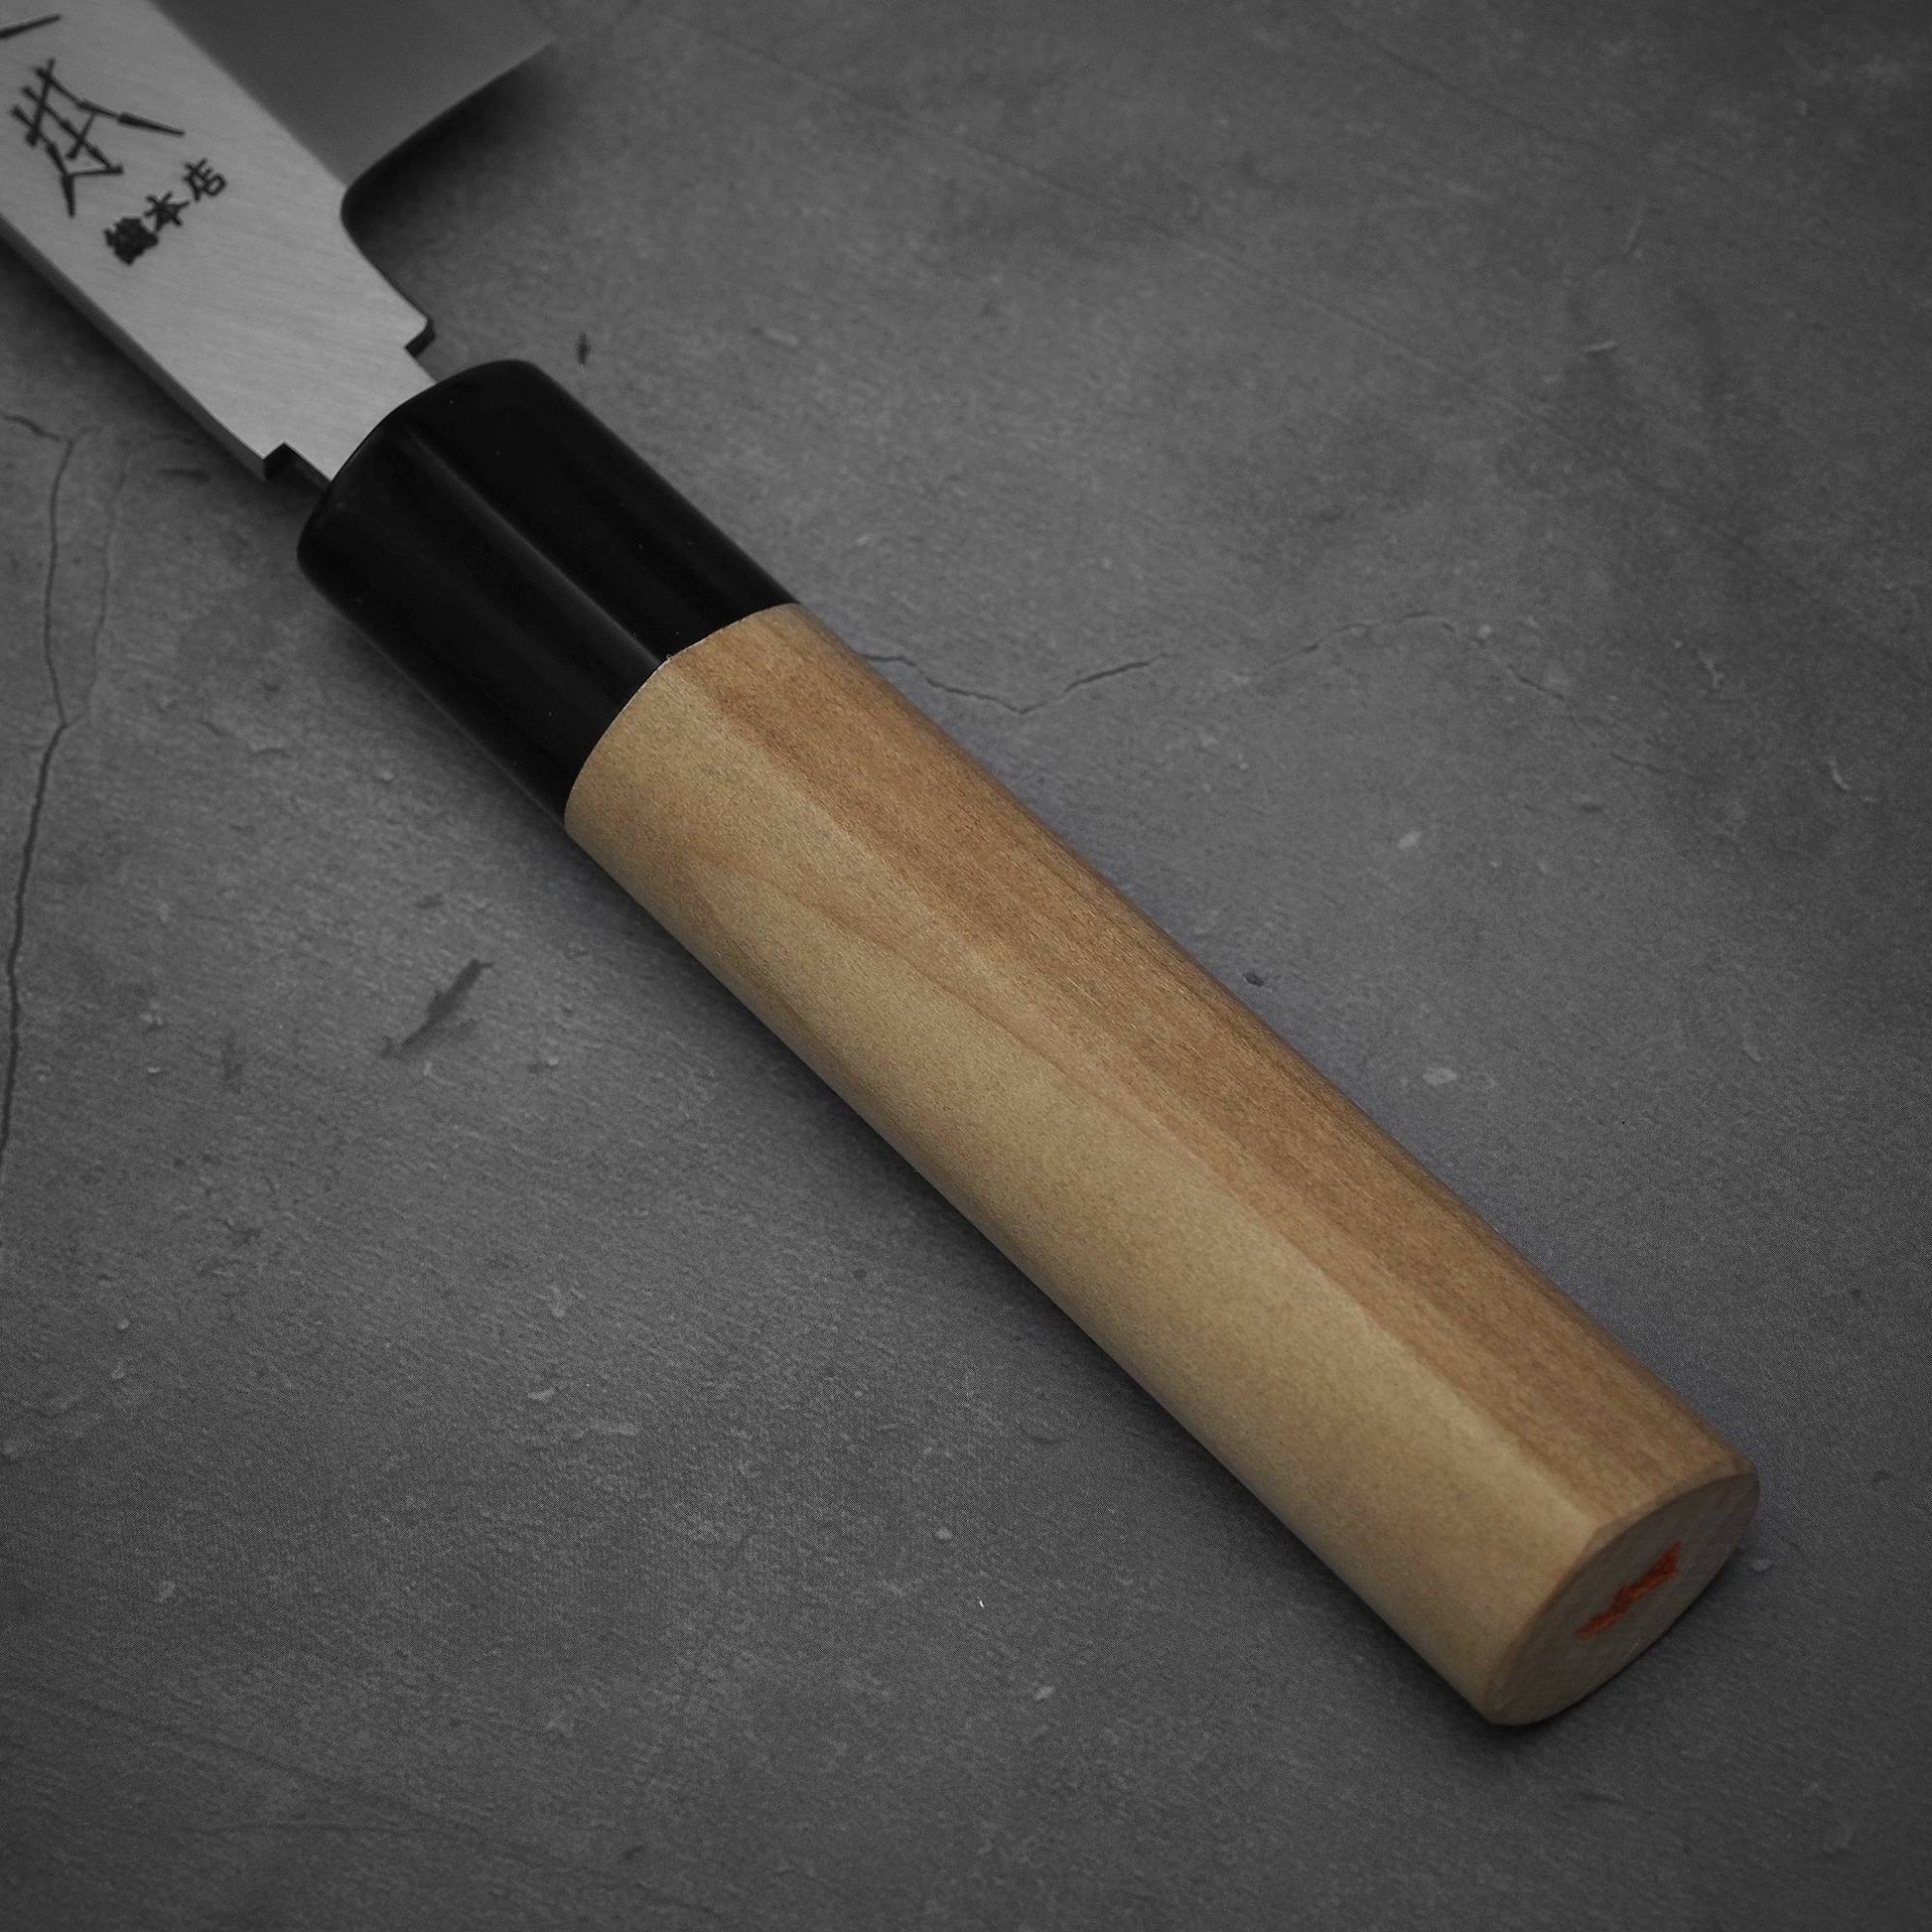 Close up view of the handle of Masamoto KS shirogami#2 kamagata usuba knife